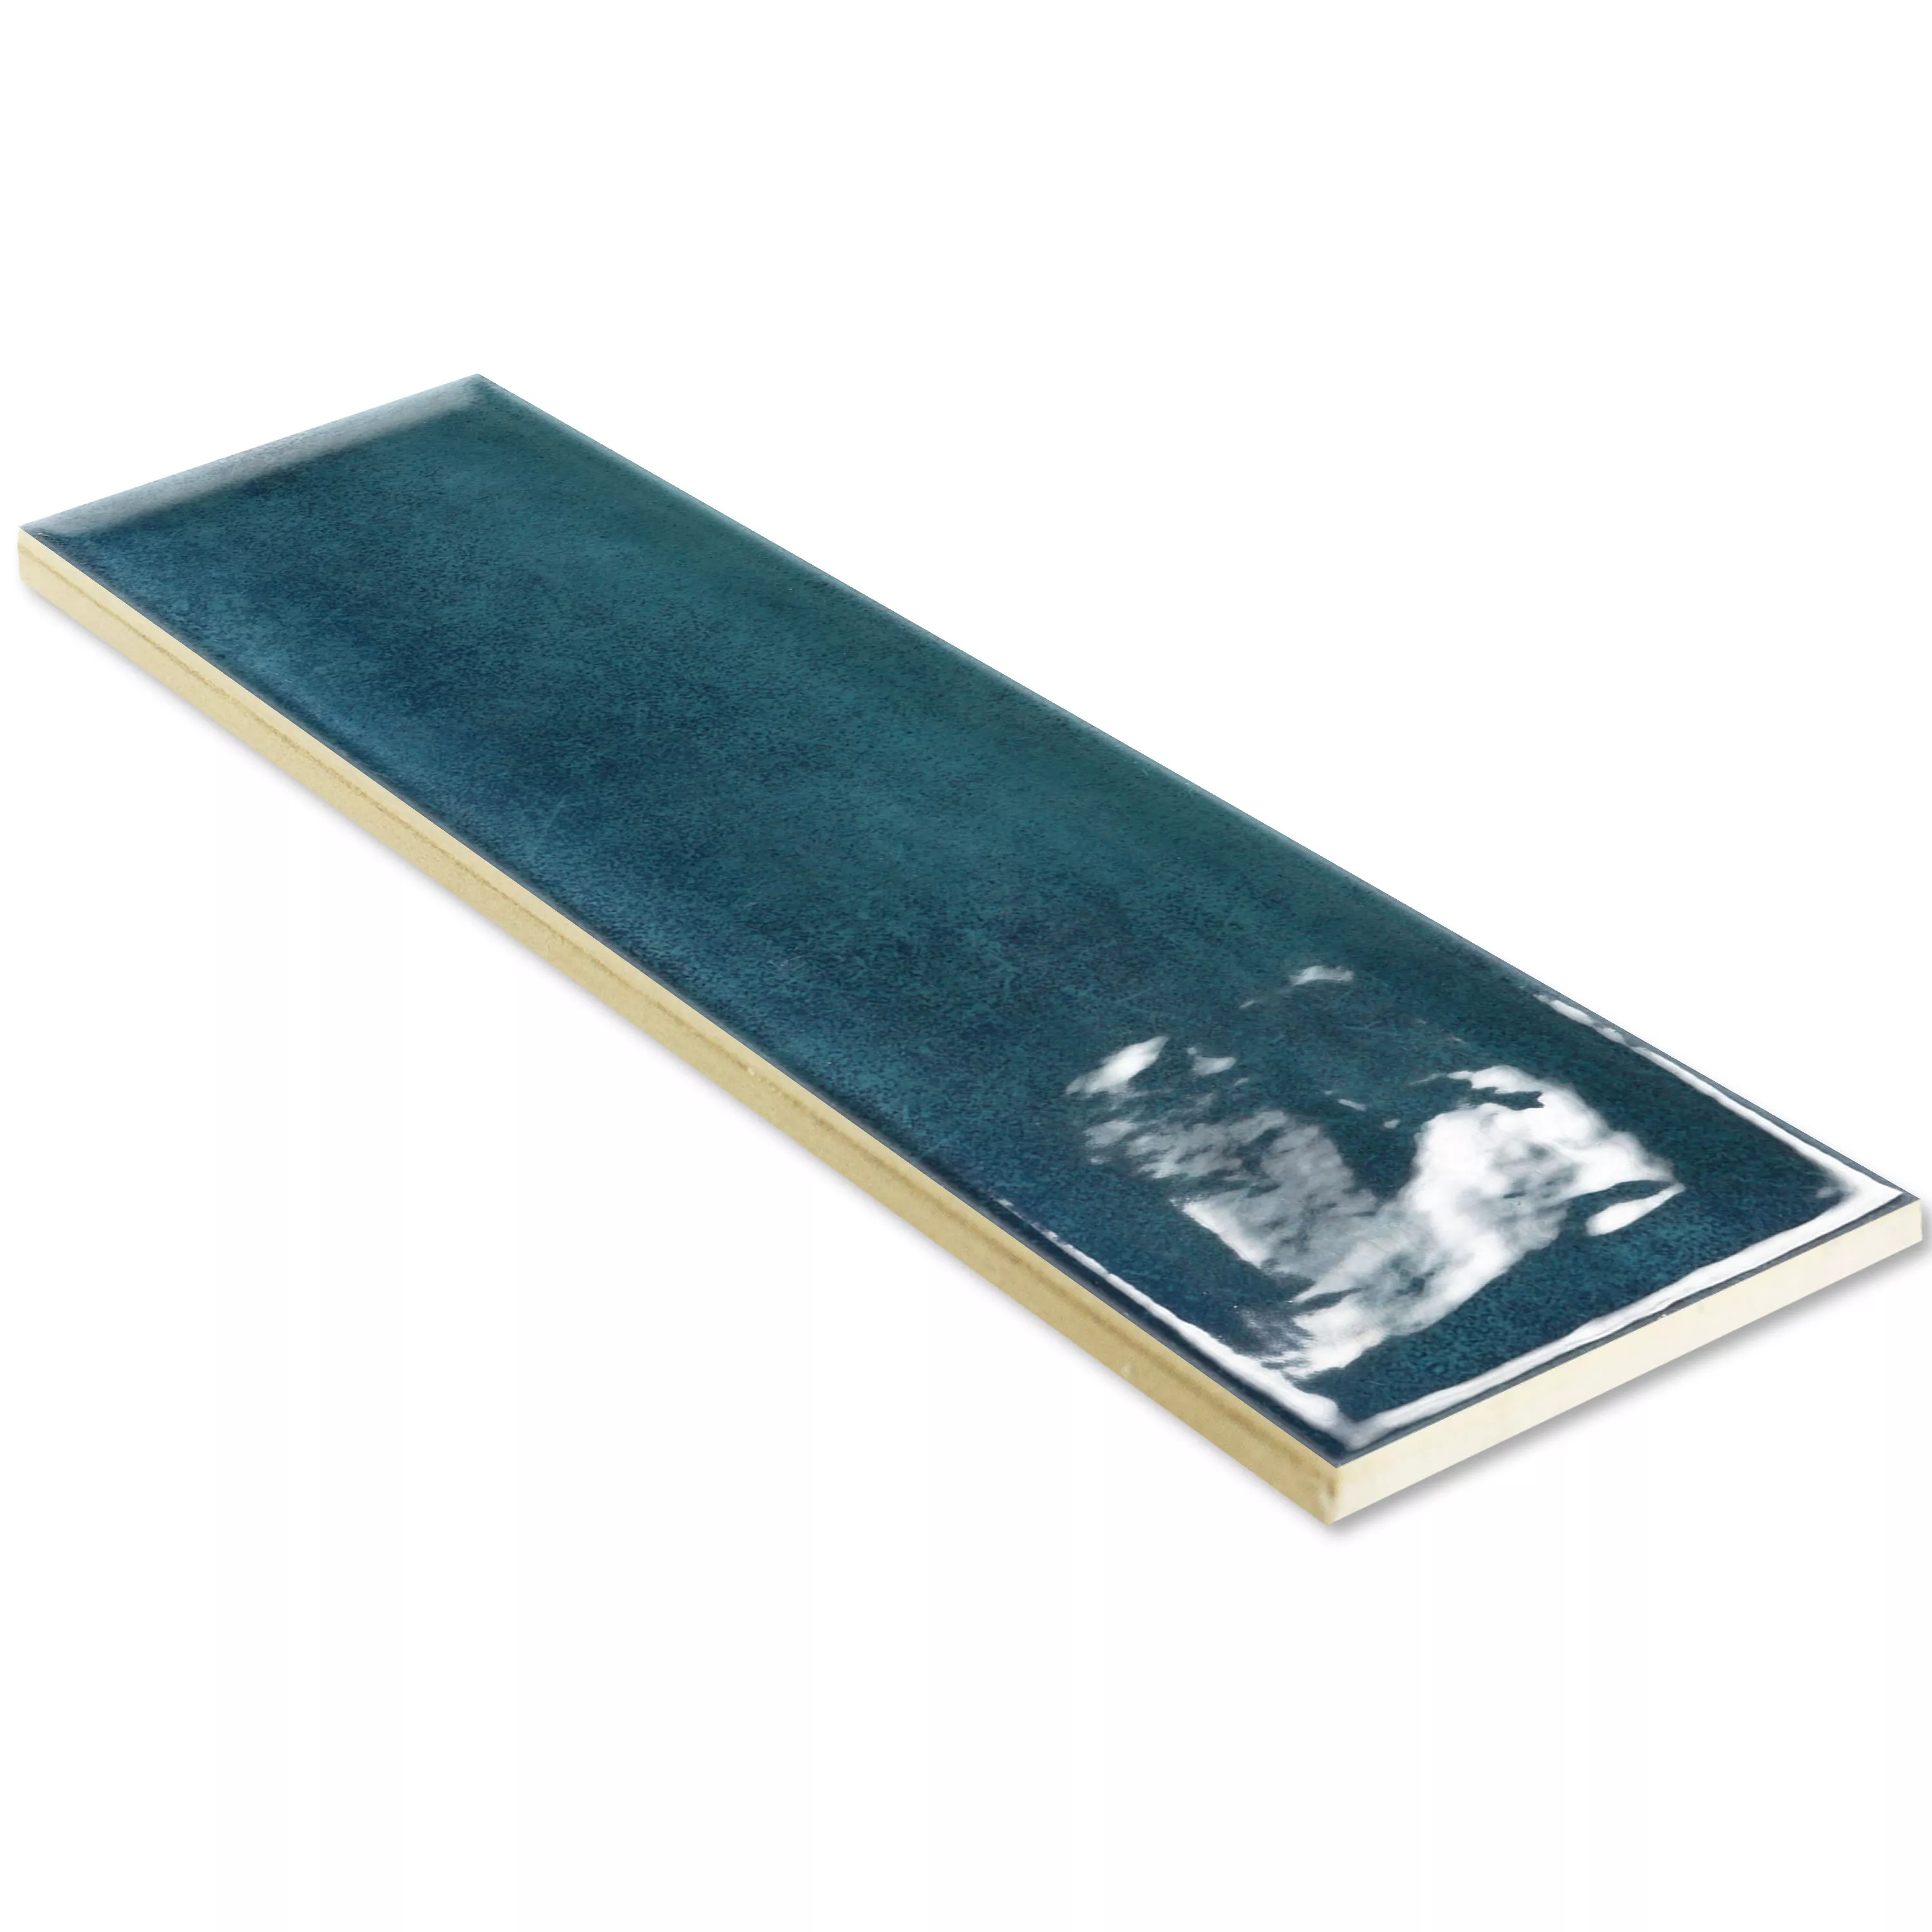 Sample Wandtegels Pascal Glanzend Binnen Met Facet Blauw 7,5x30cm